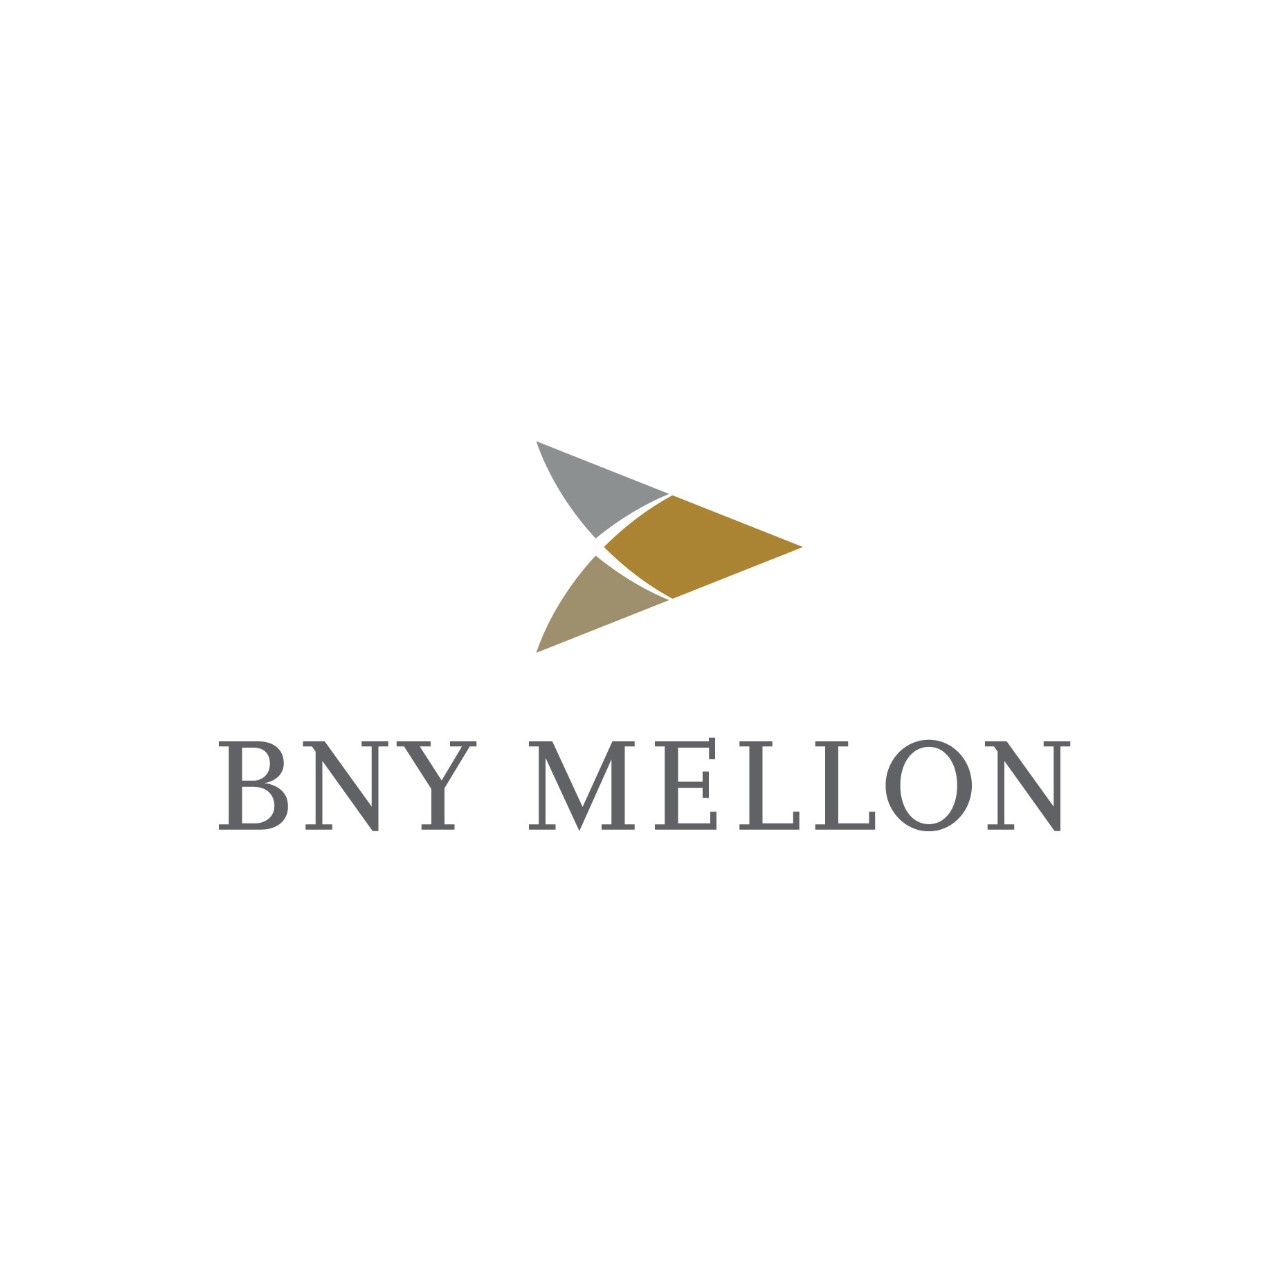 The bank of new mellon